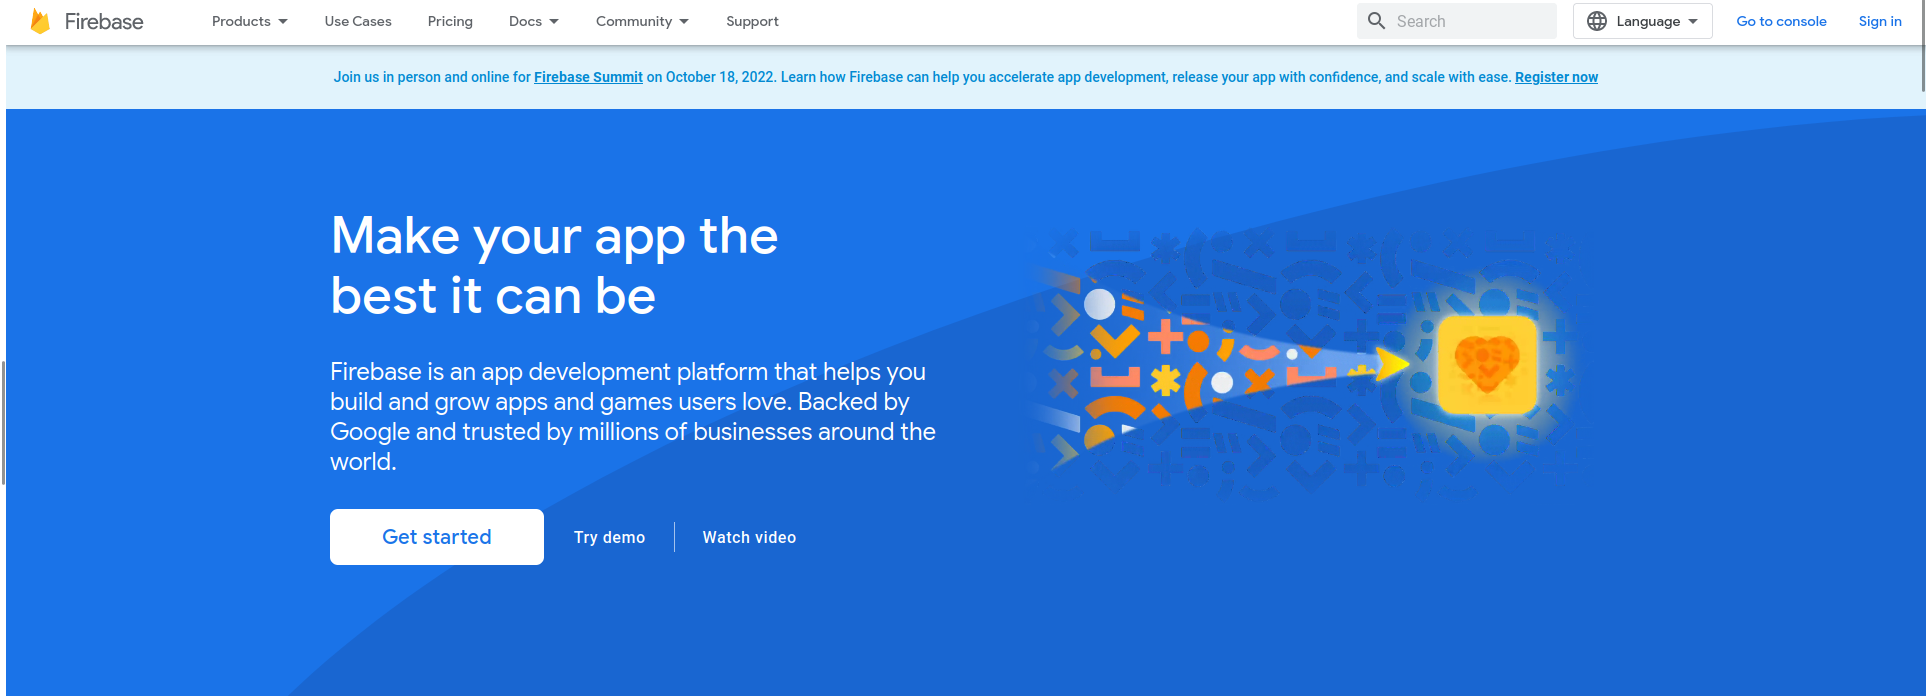 Firebase homepage